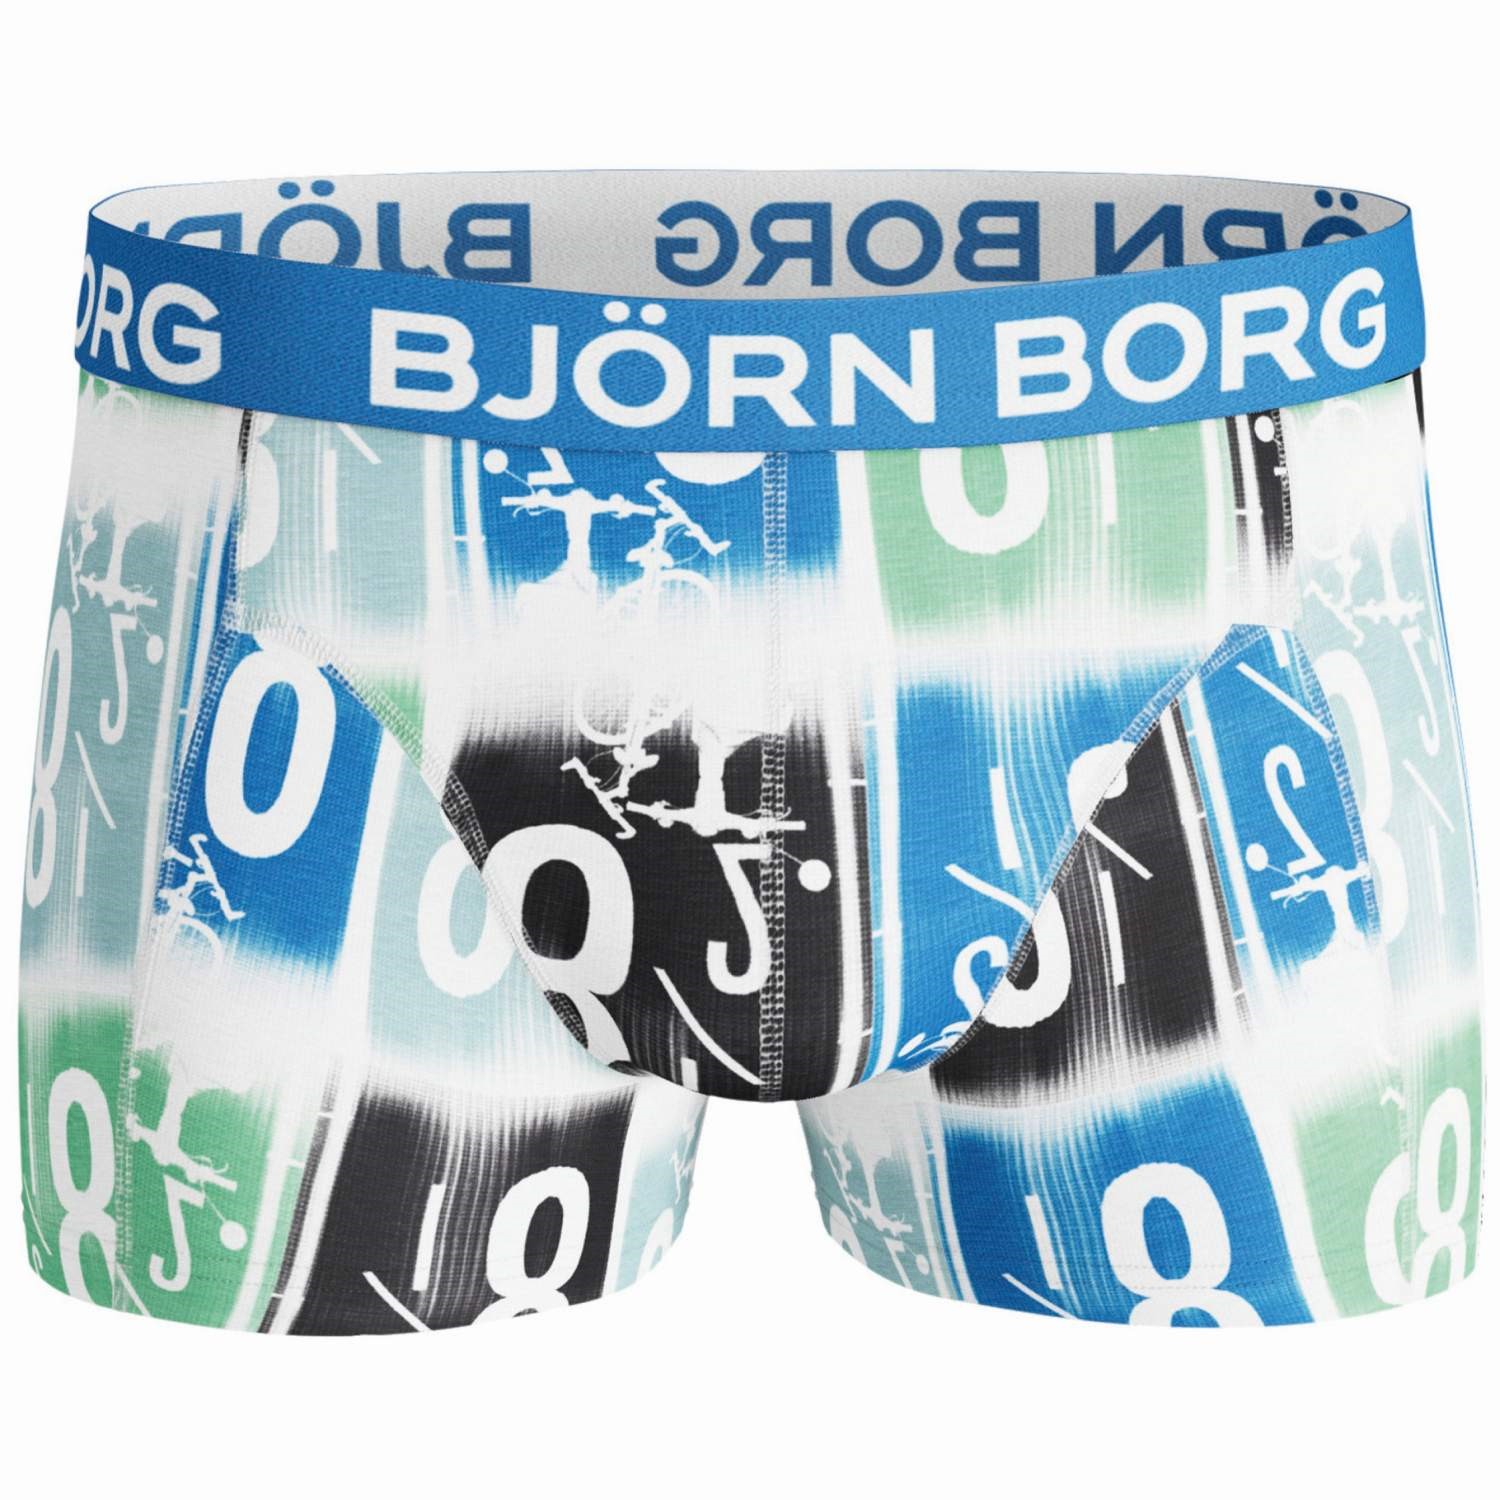 Björn Borg Short Shorts Silhouette 